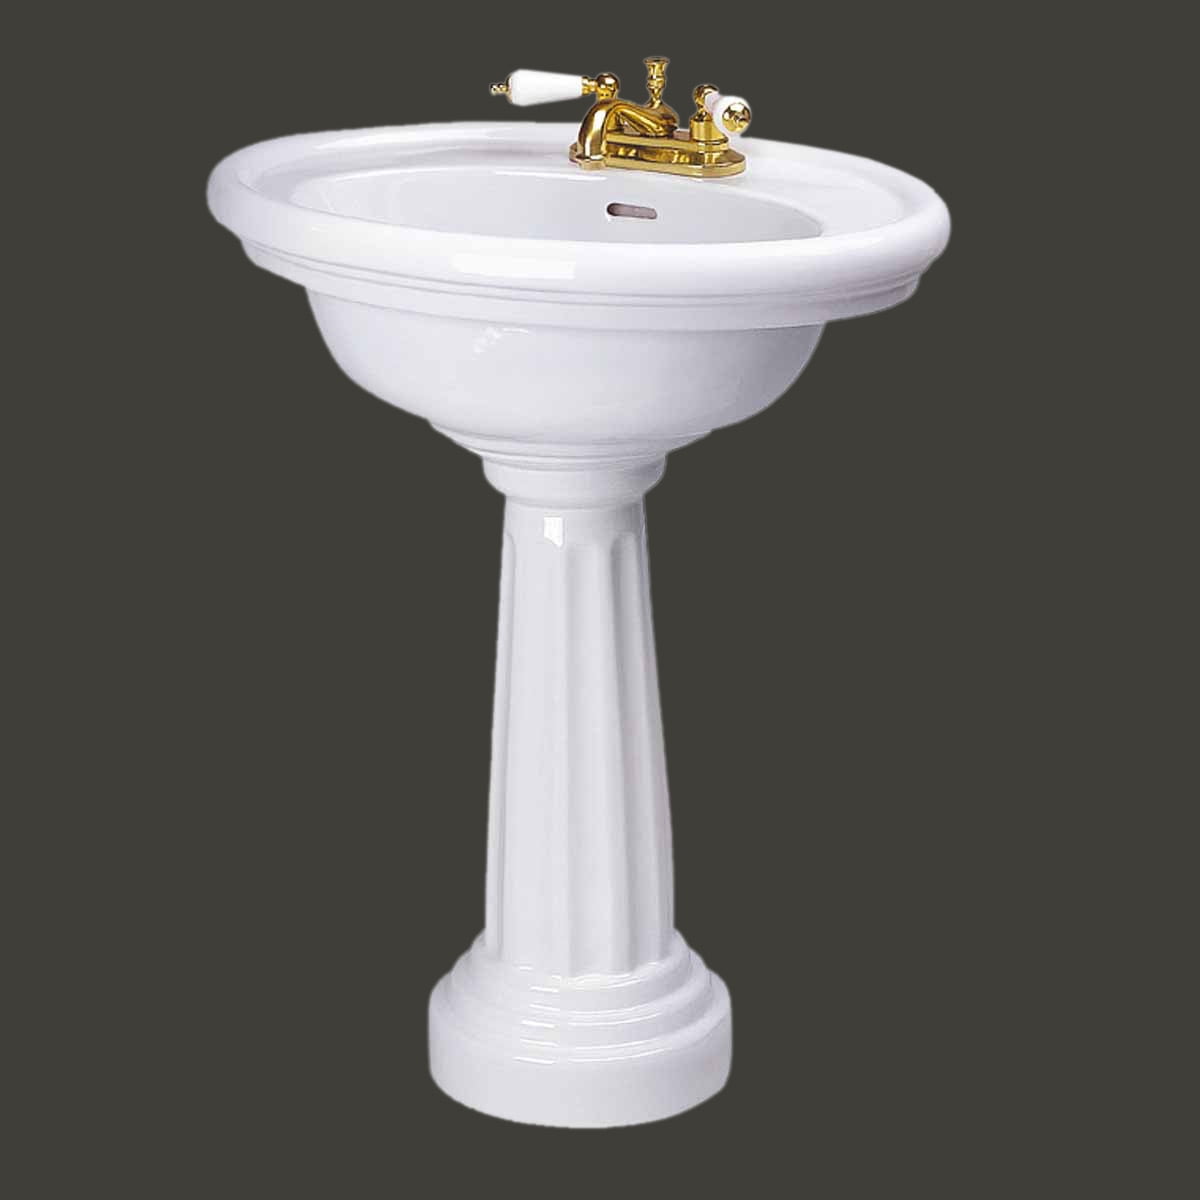 Bathroom Freestanding Pedestal Sink White China Deluxe Philadelphia Renovator